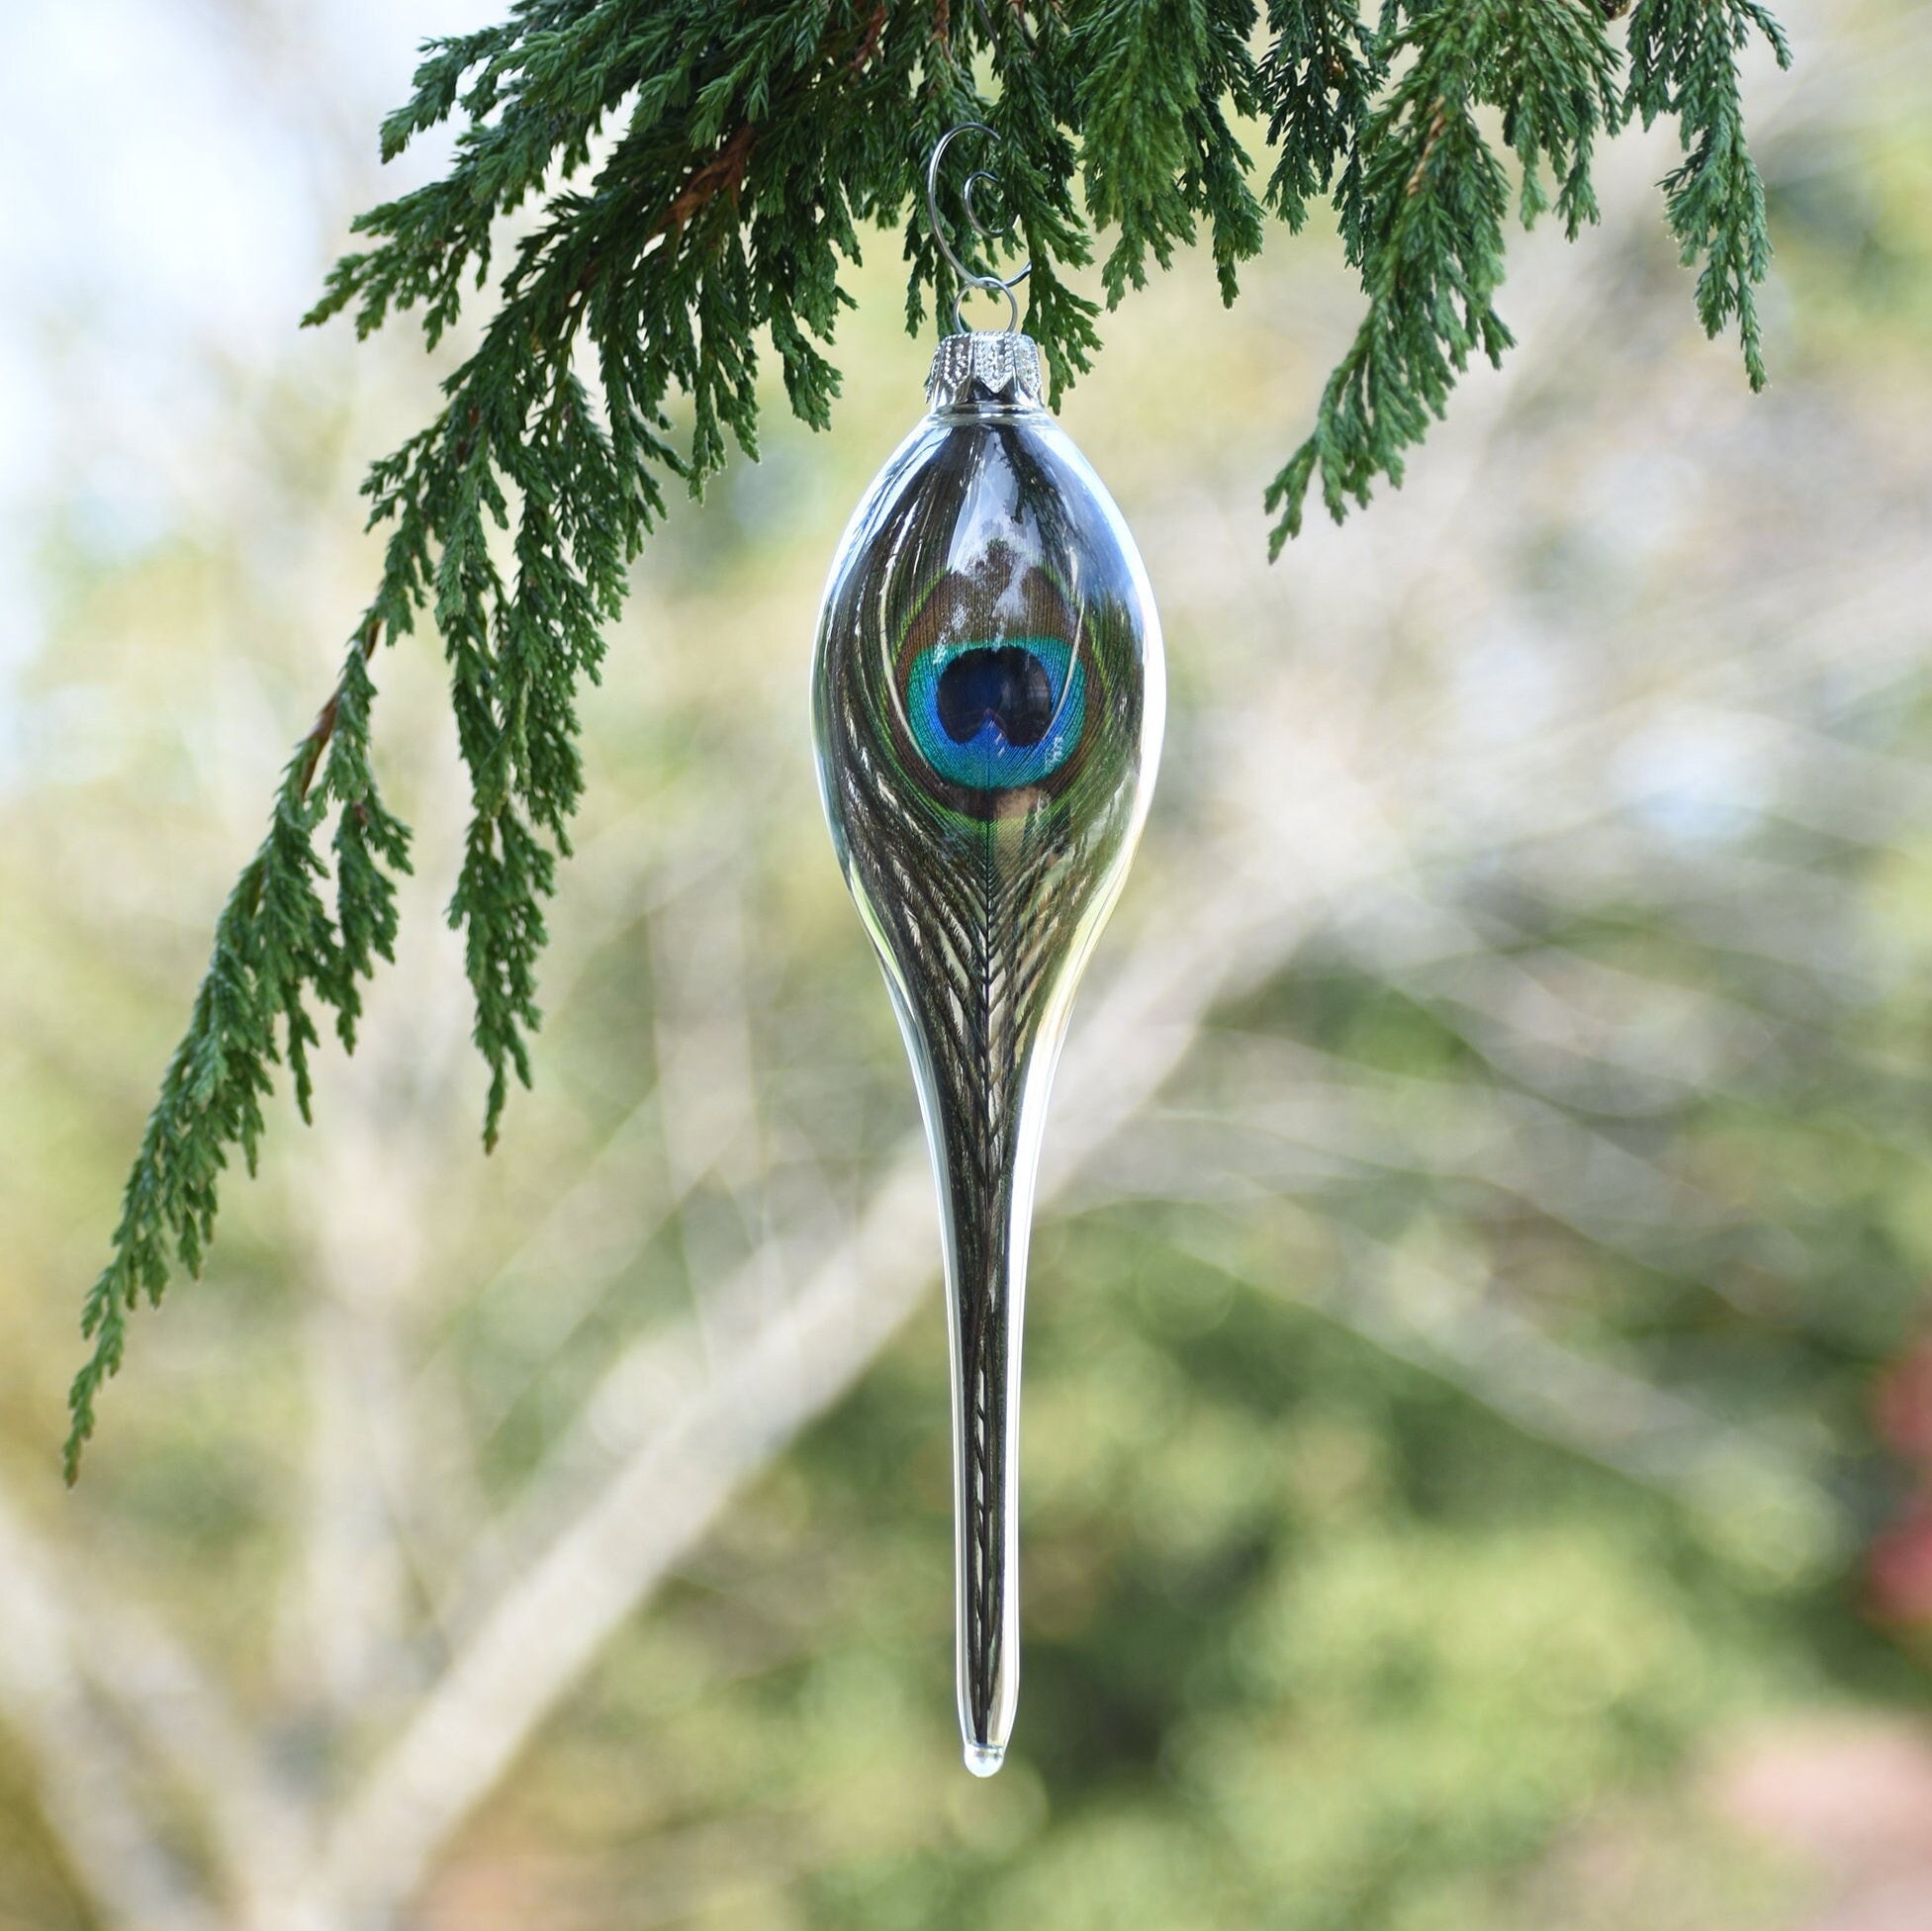 Hand Blown Glass Peacock Ornament 